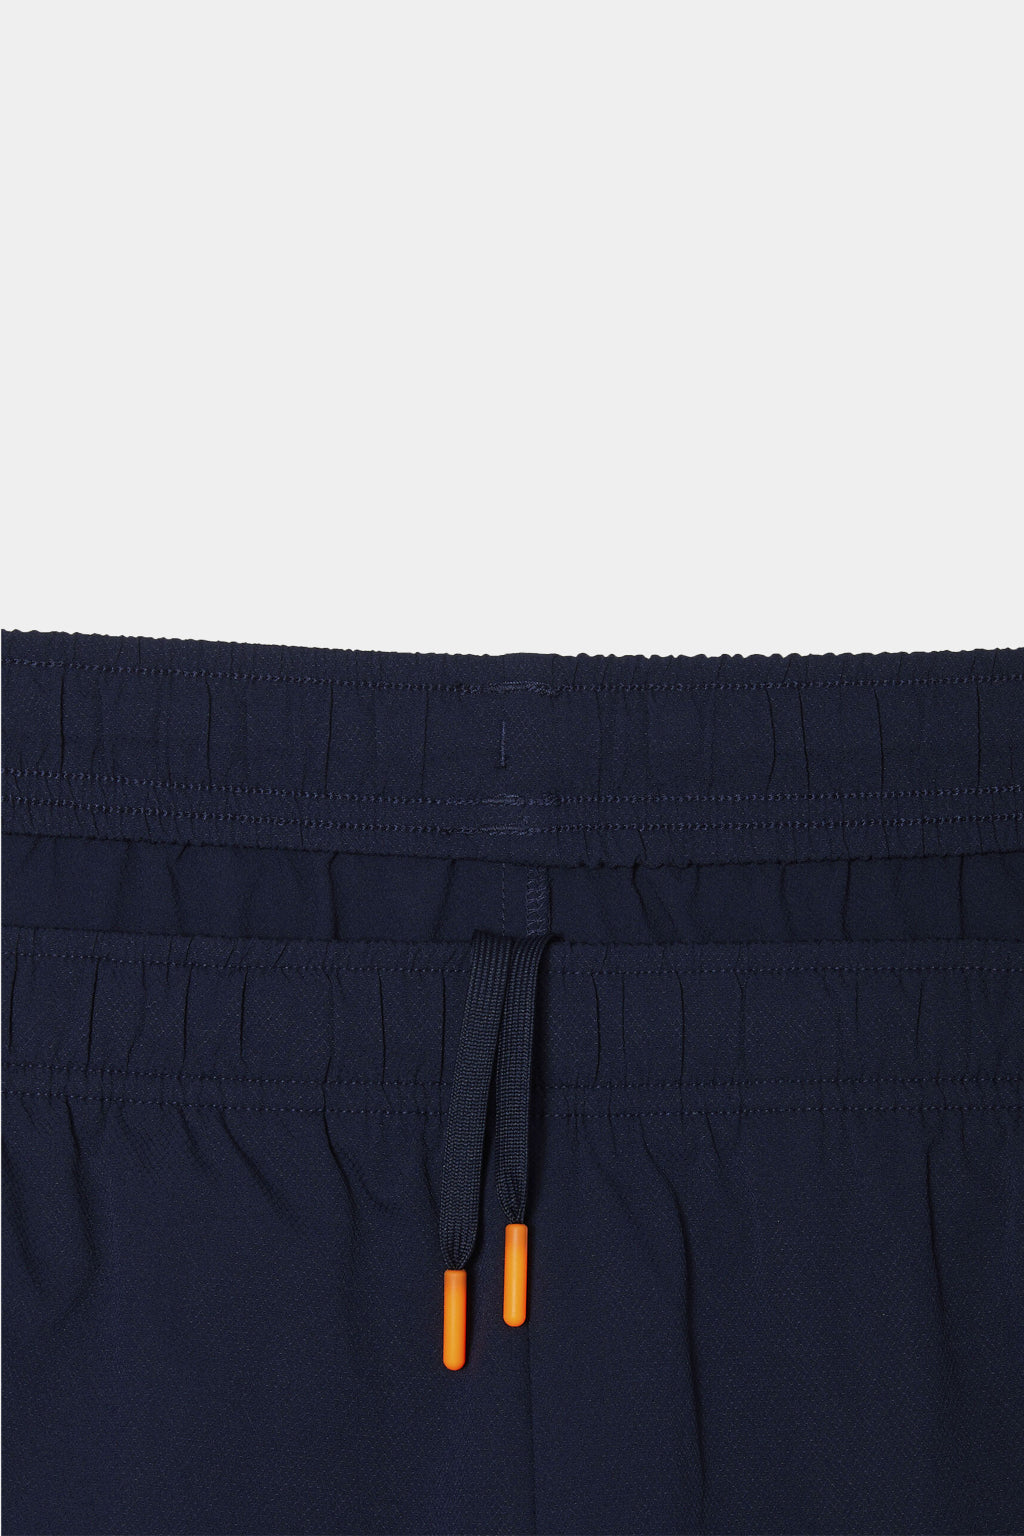 Lacoste - Lacoste Men's Striped Tennis Shorts